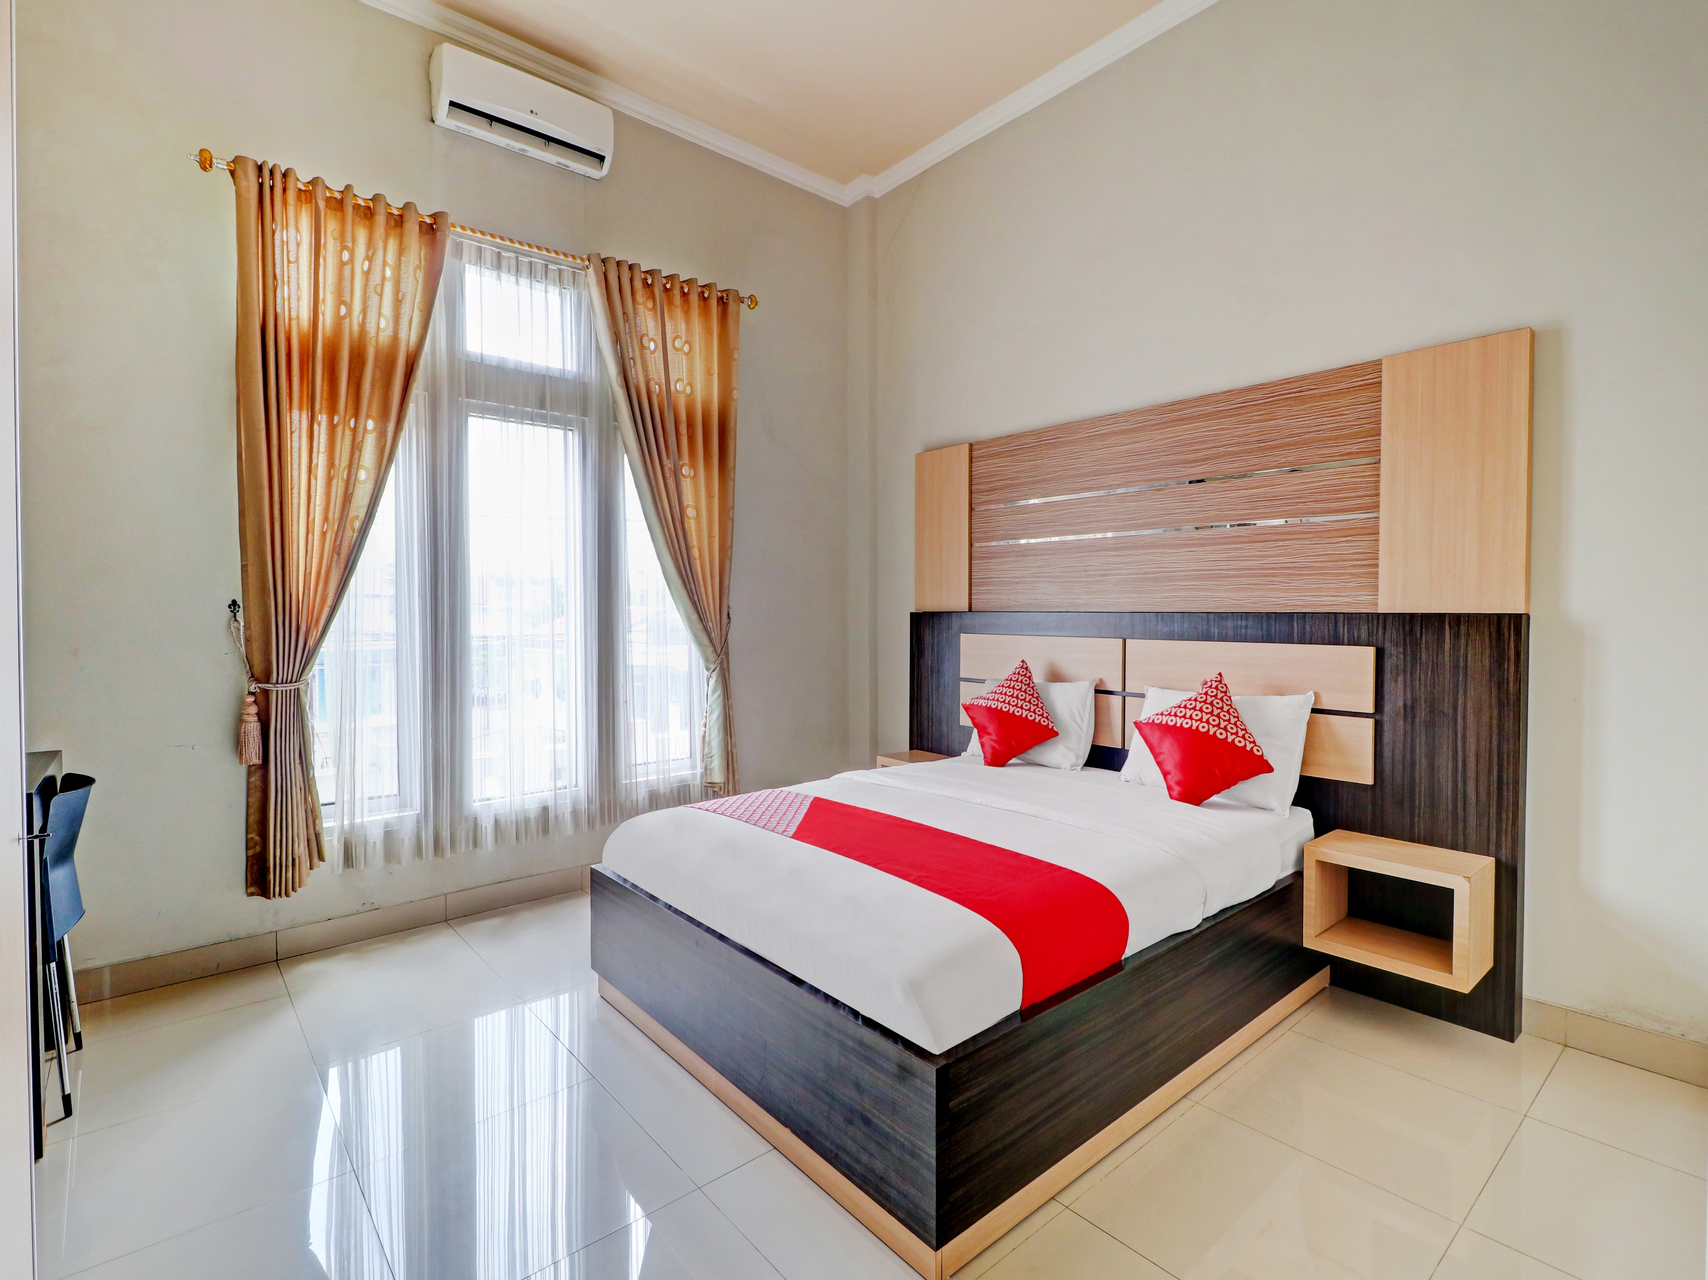 Bedroom 1, OYO 90347 Hotel Srikandi Syariah, Tasikmalaya